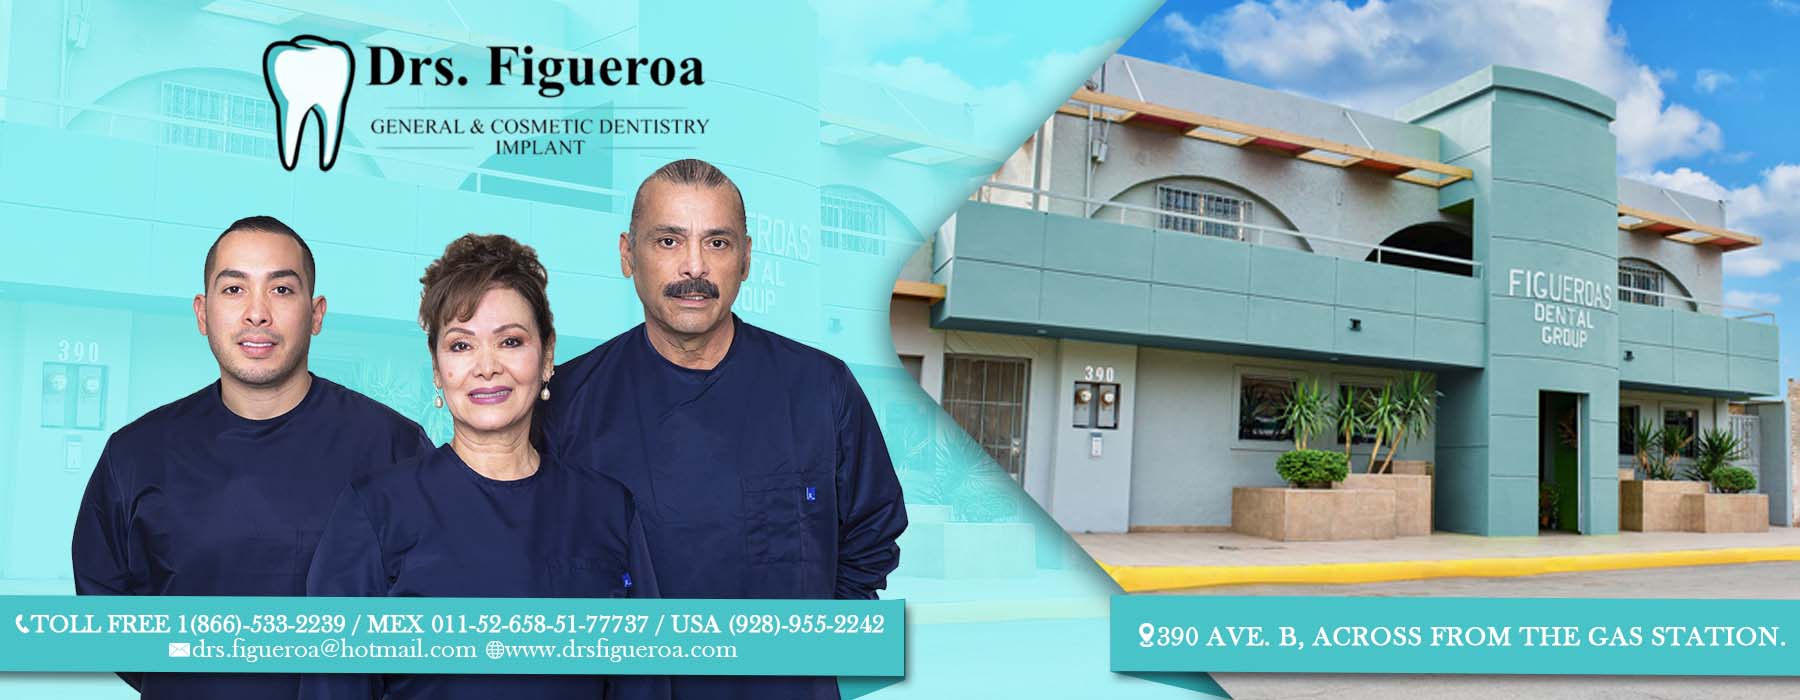 Drs. Figueroa Dental Group